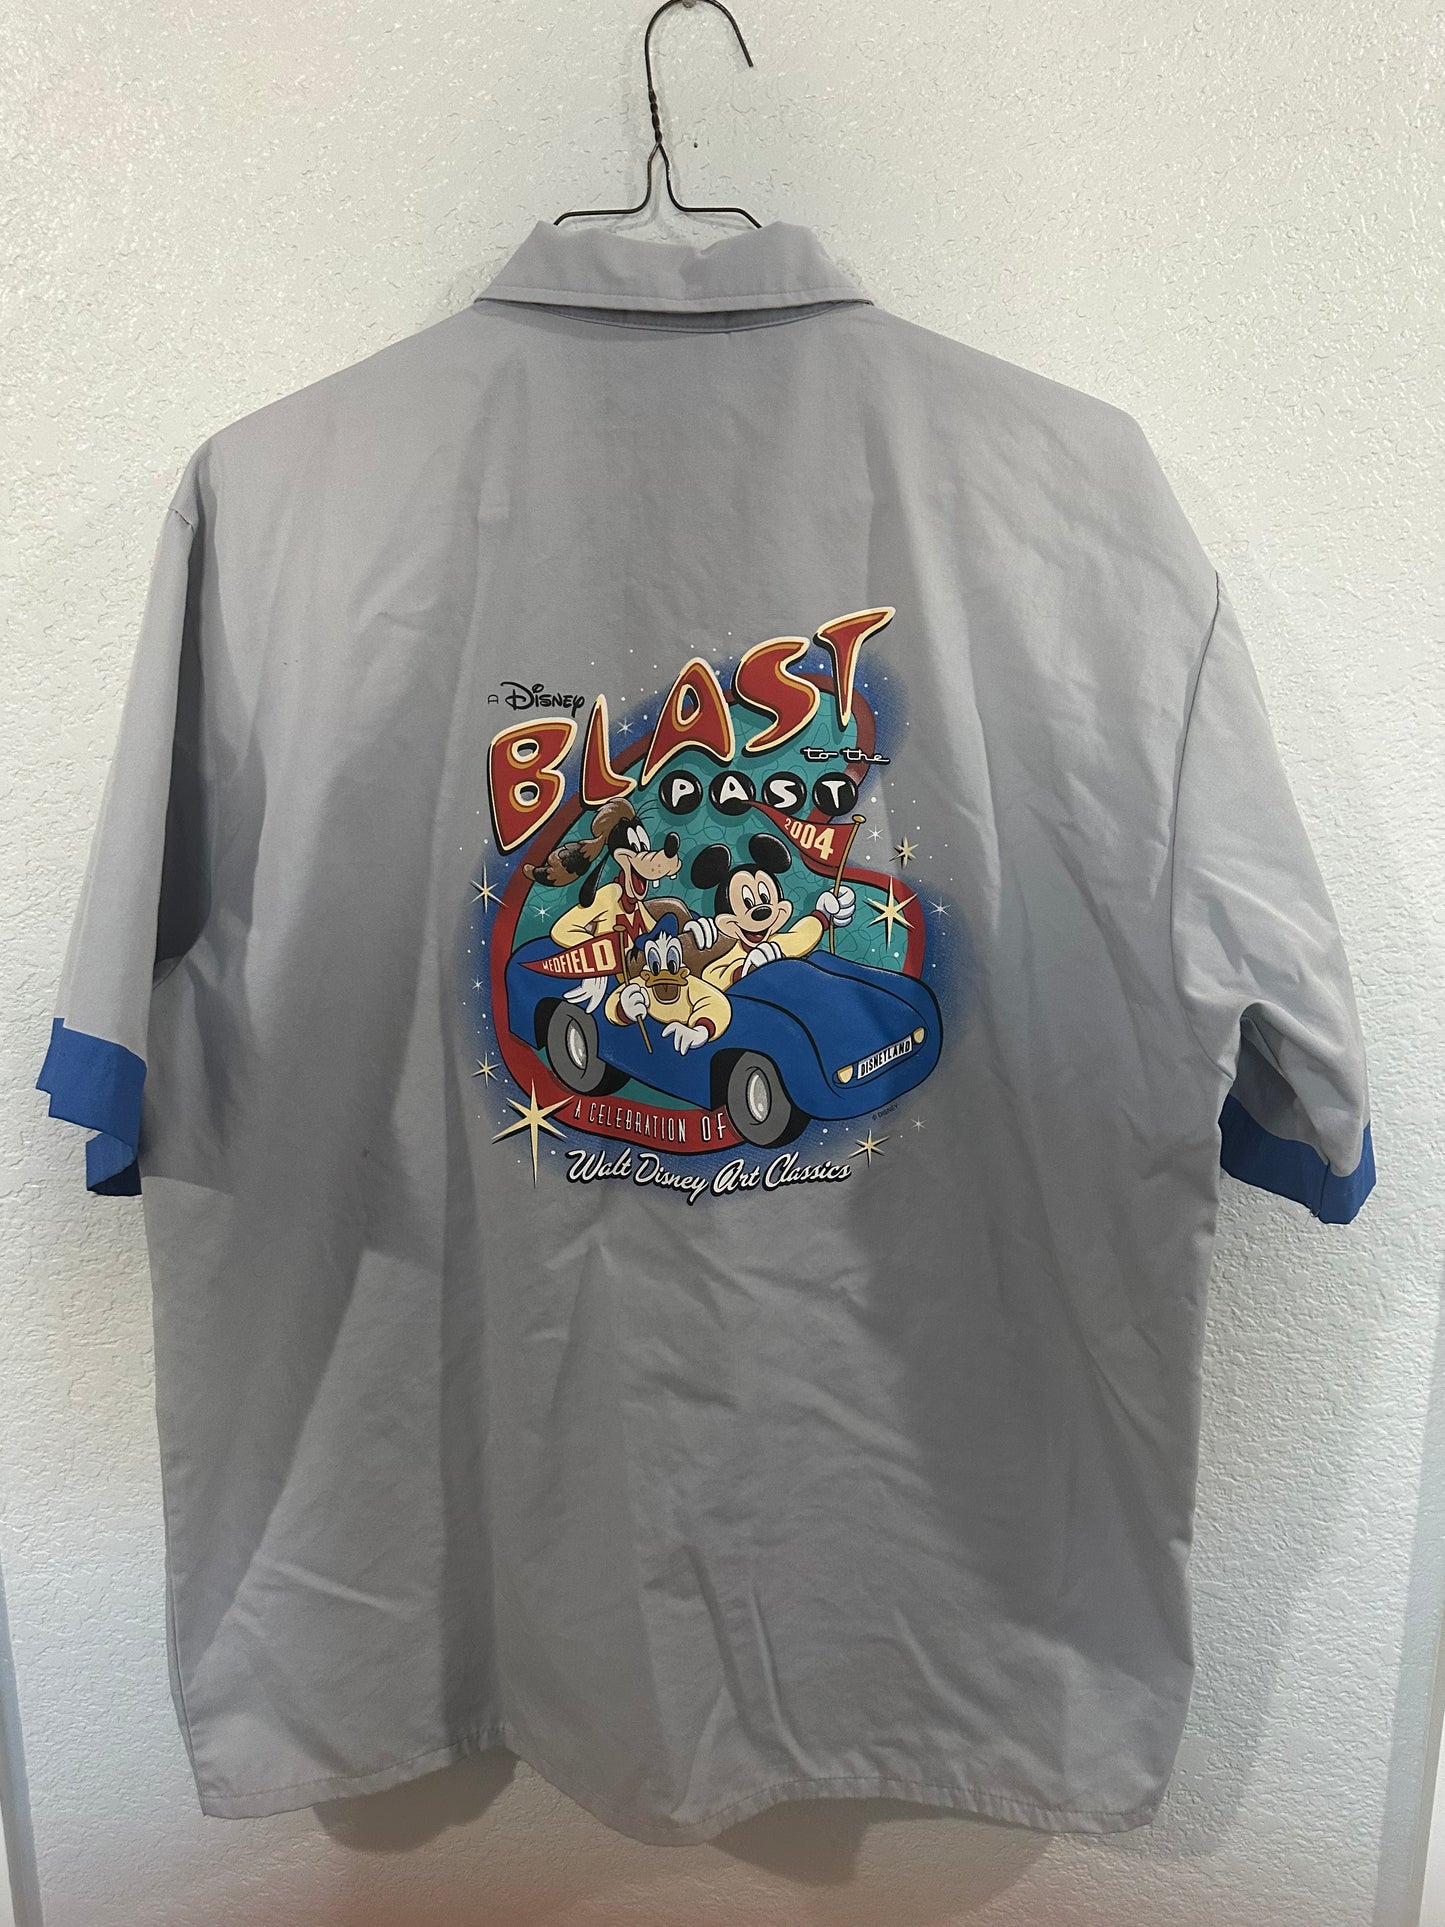 2004 Vintage Disney collard shirt